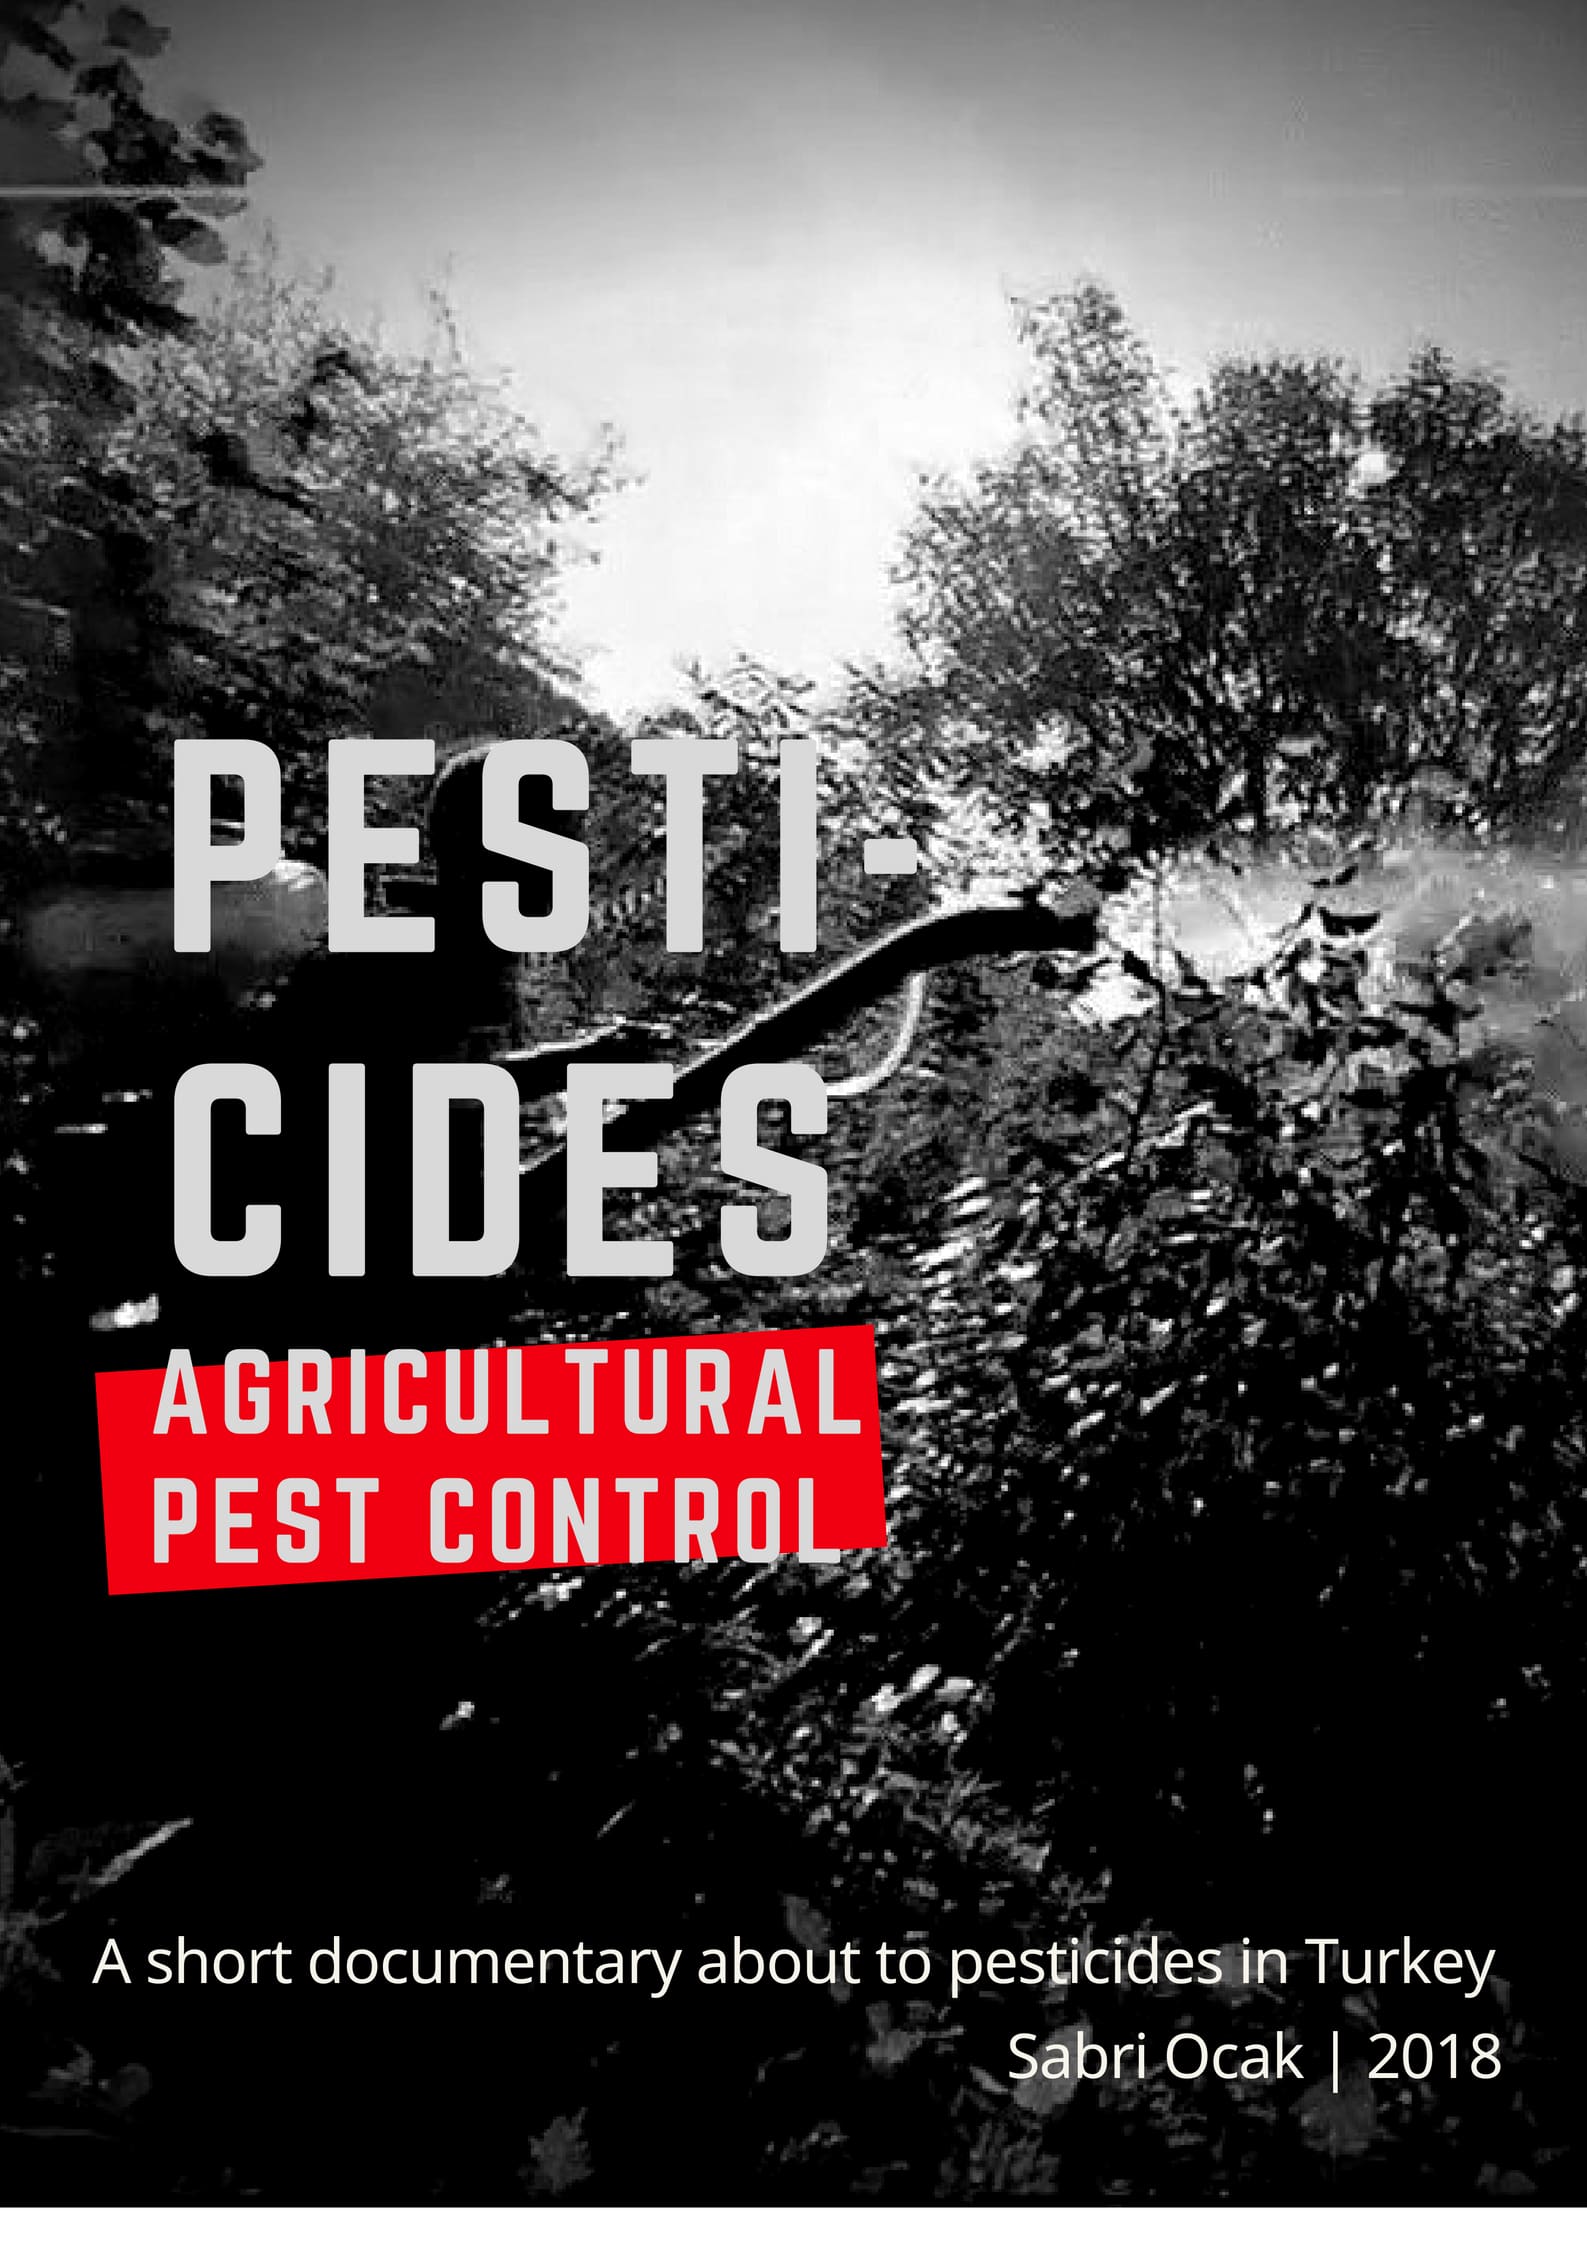 Pesticides - Agricultural Pest Control